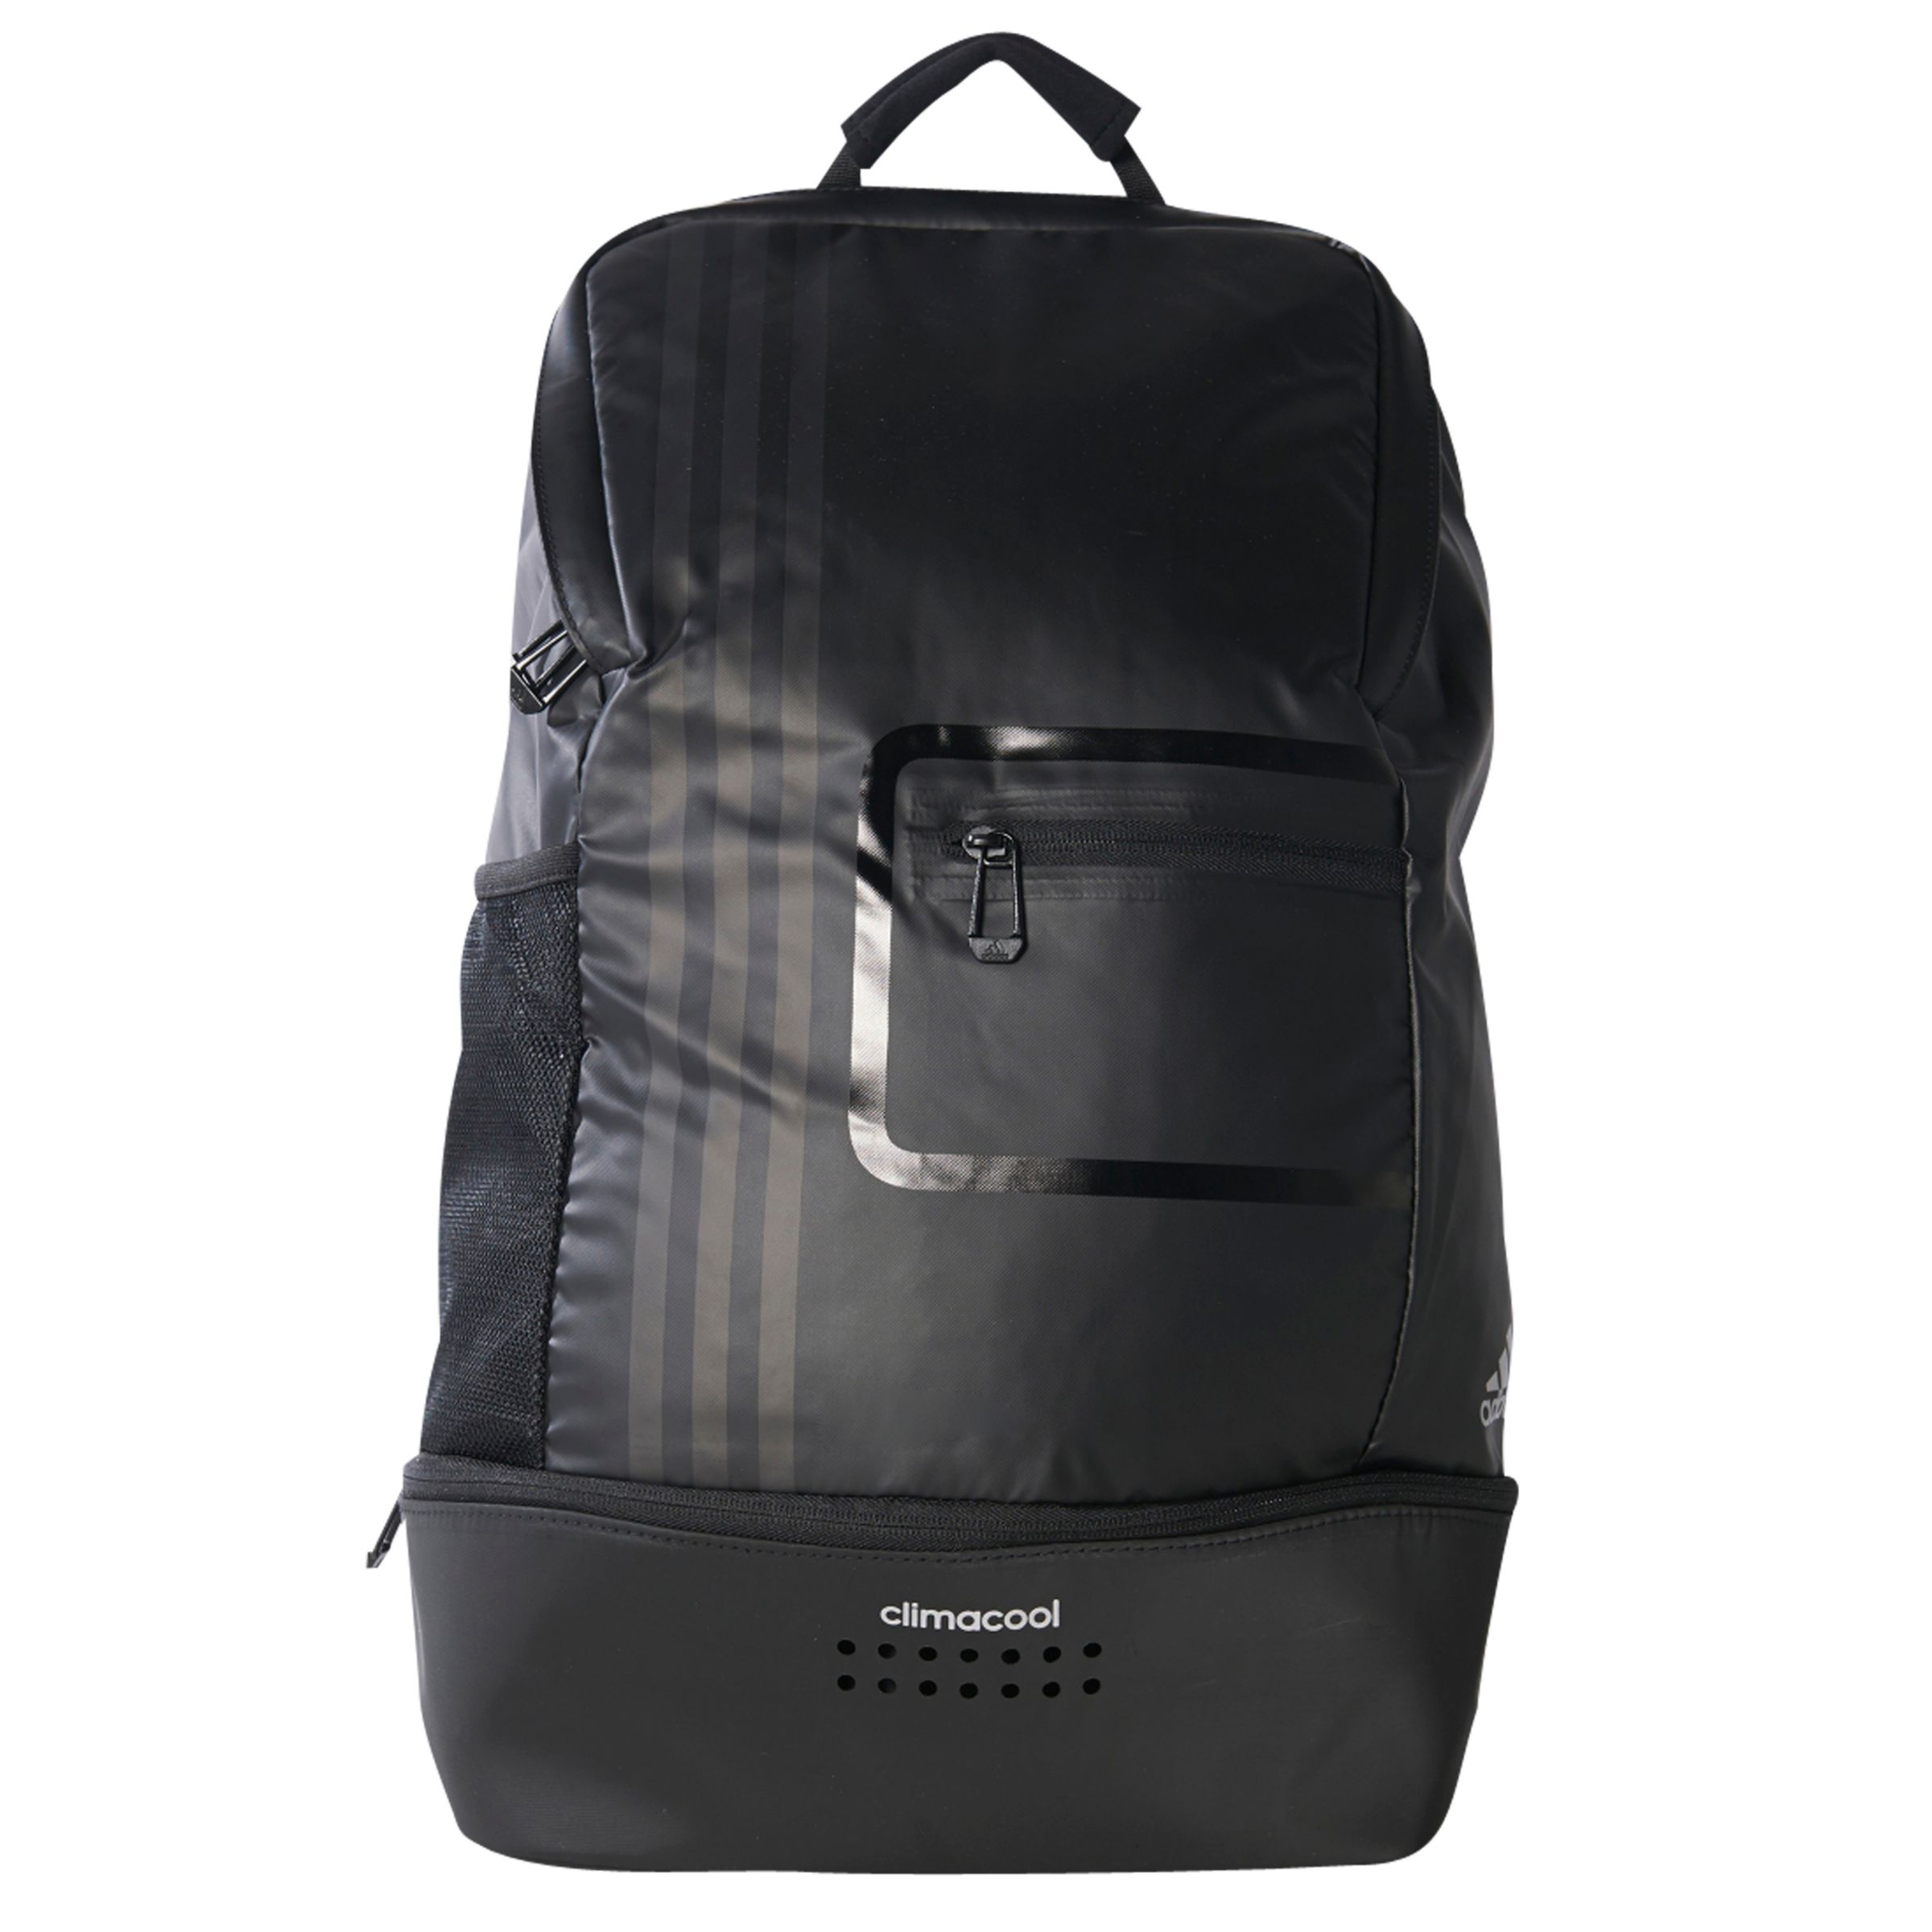 Adidas Climacool Backpack, Black/Matte Silver at John Lewis \u0026 Partners